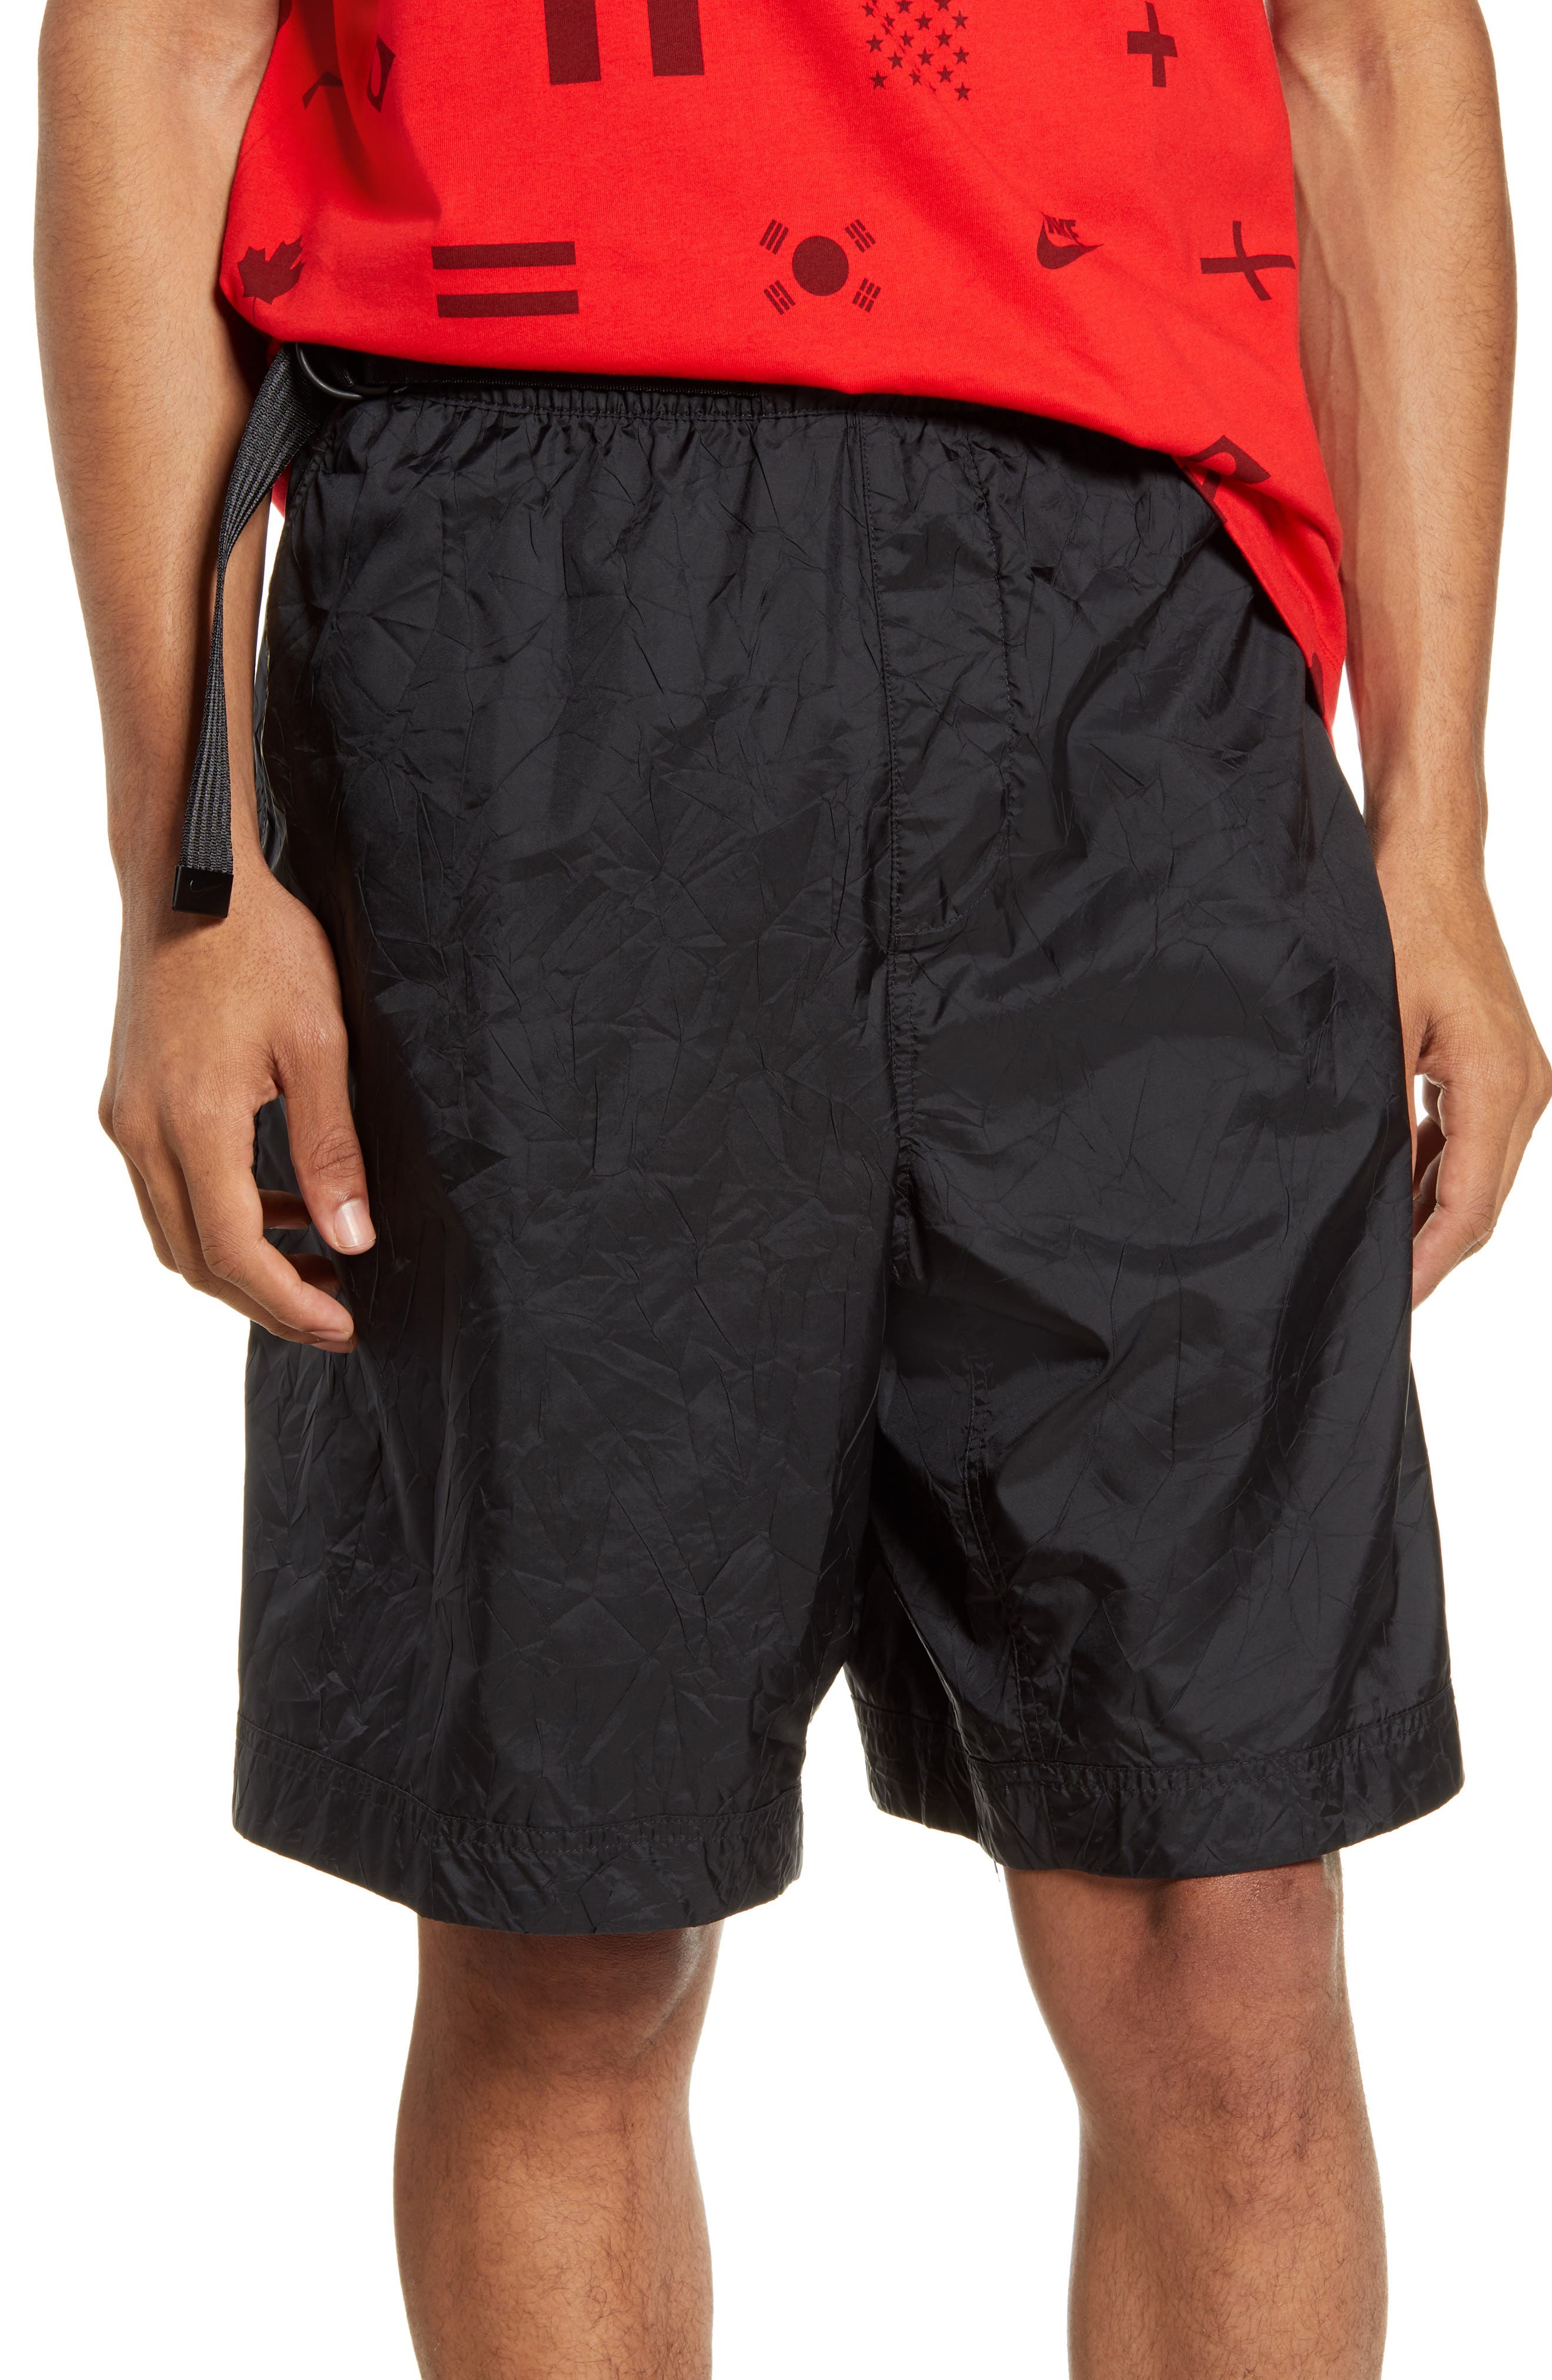 men's nike shorts clearance